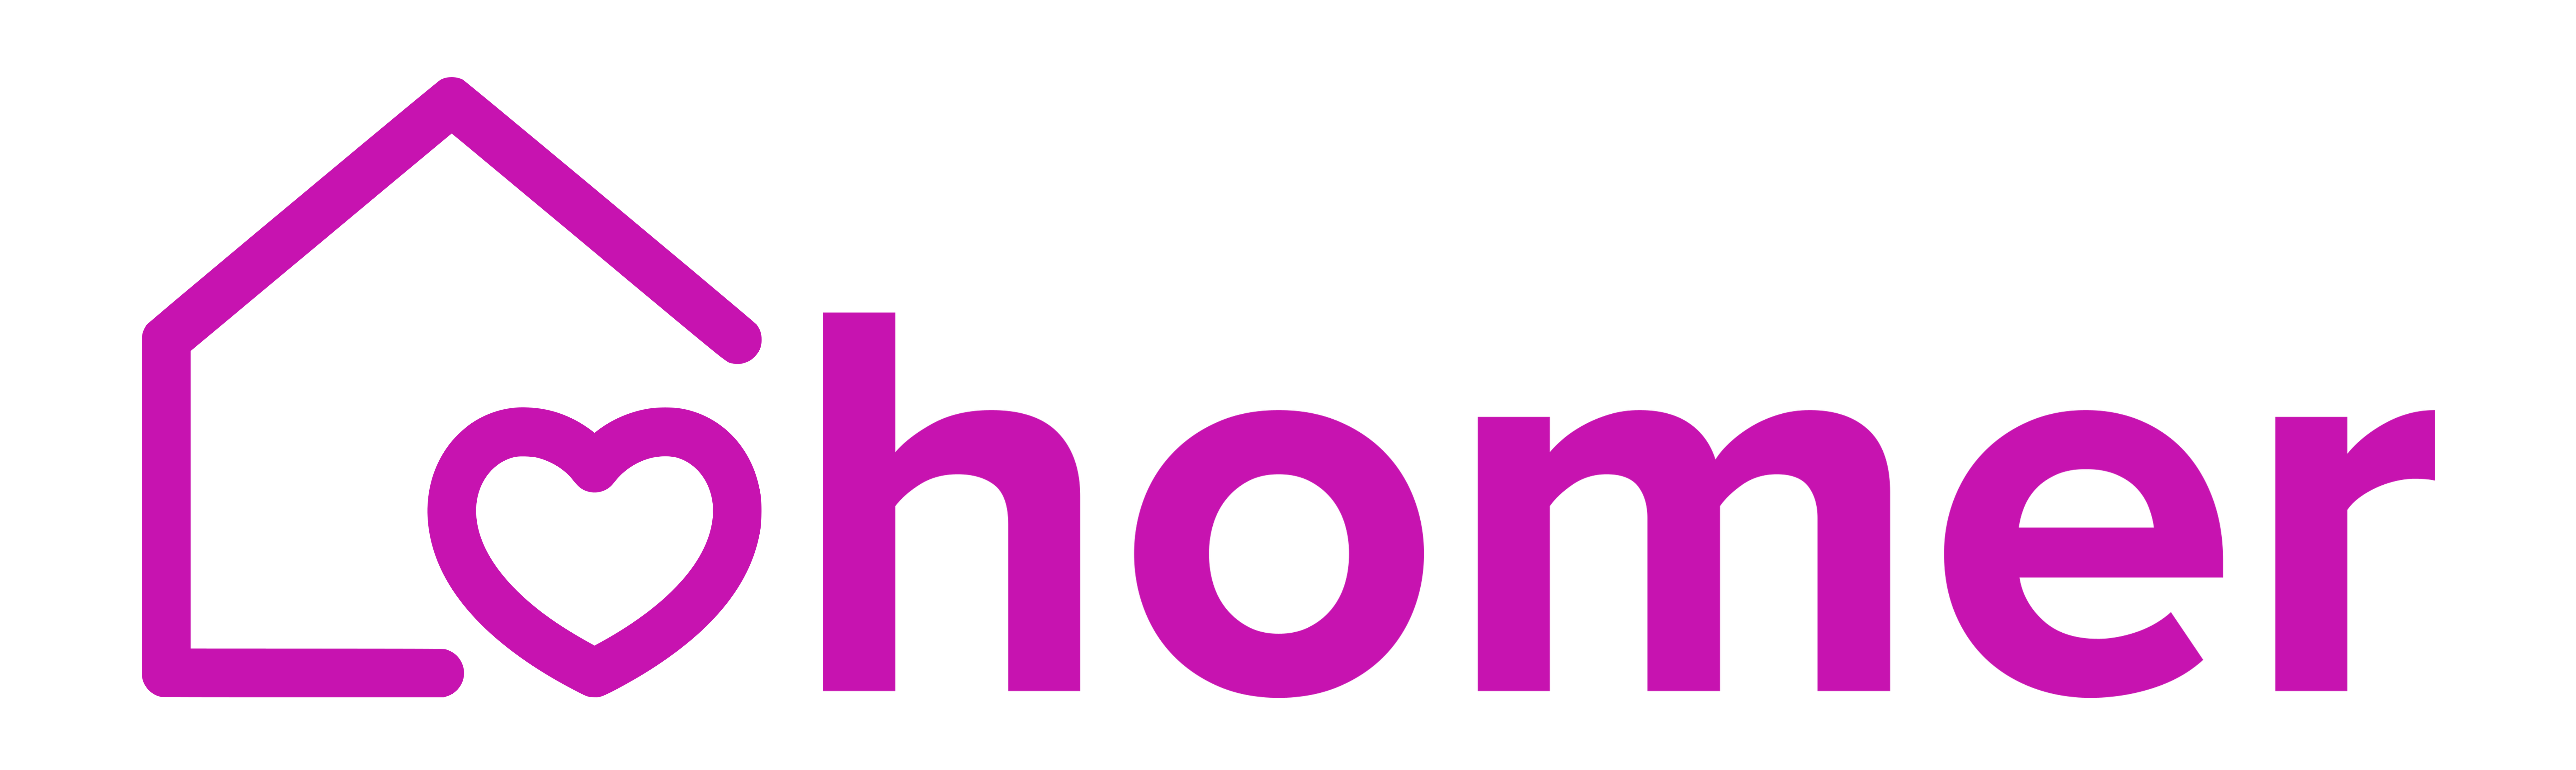 Homer-logo